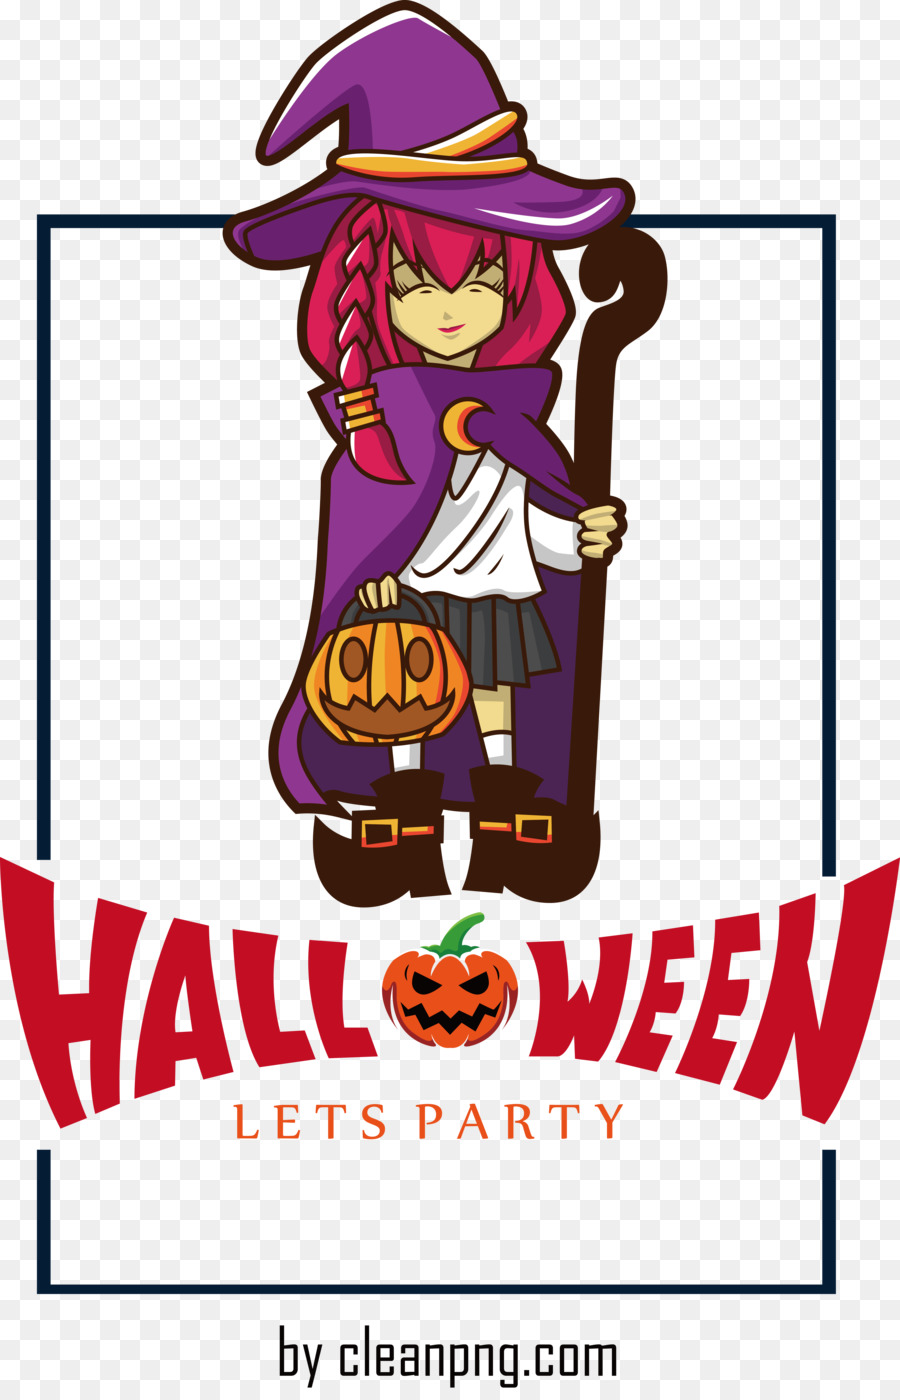 halloween party - 